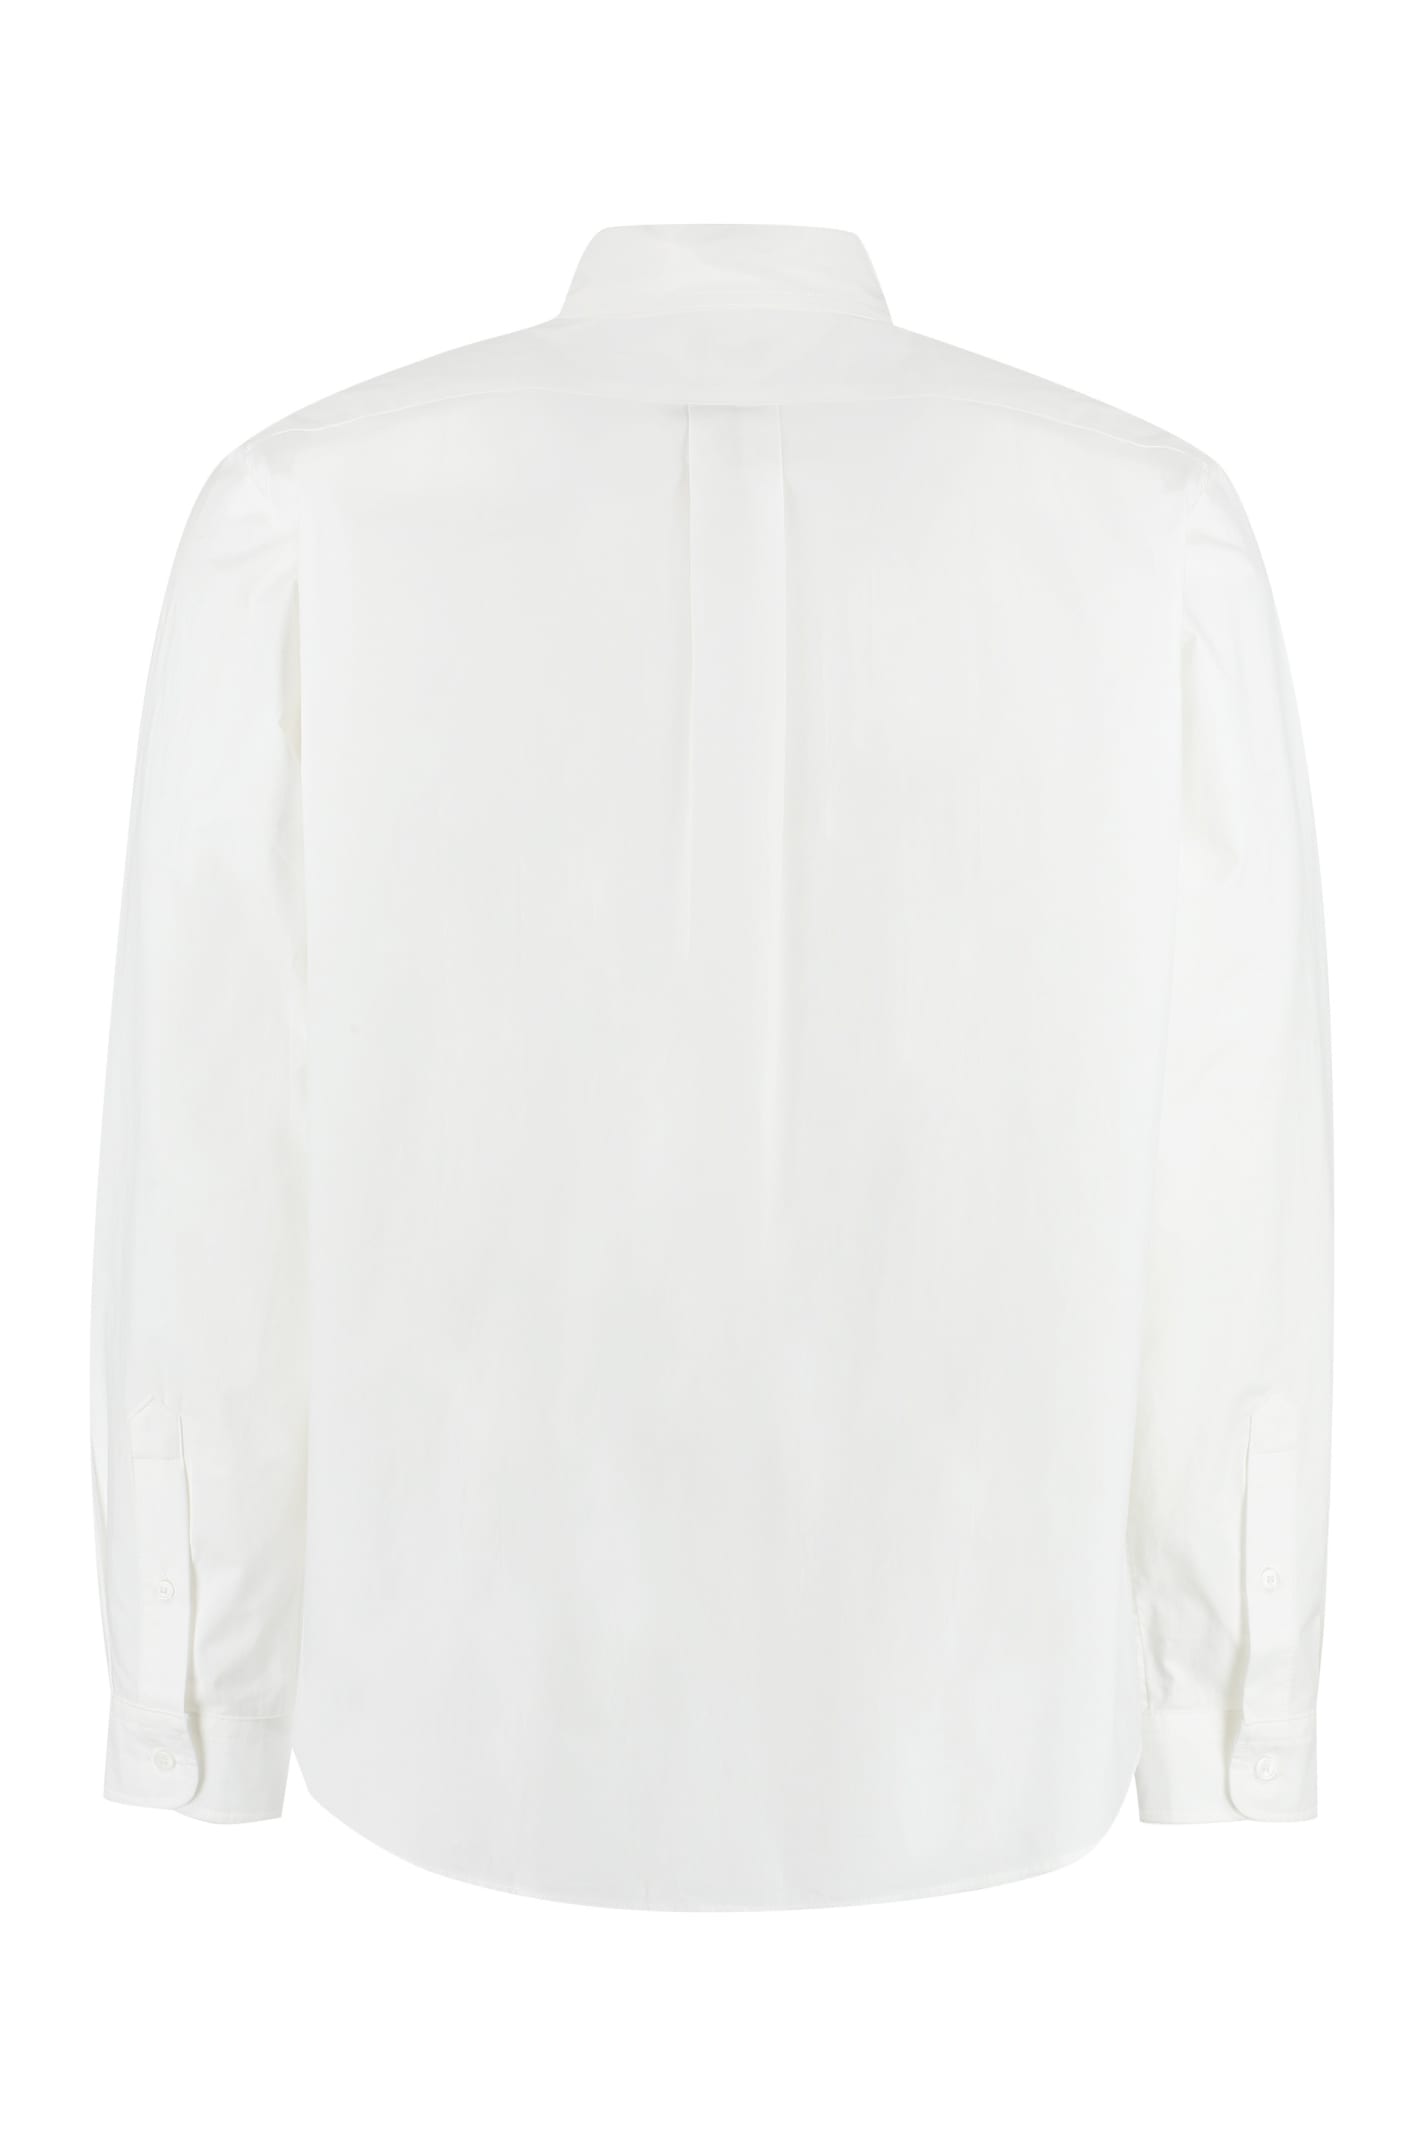 Shop Kenzo Button-down Collar Cotton Shirt